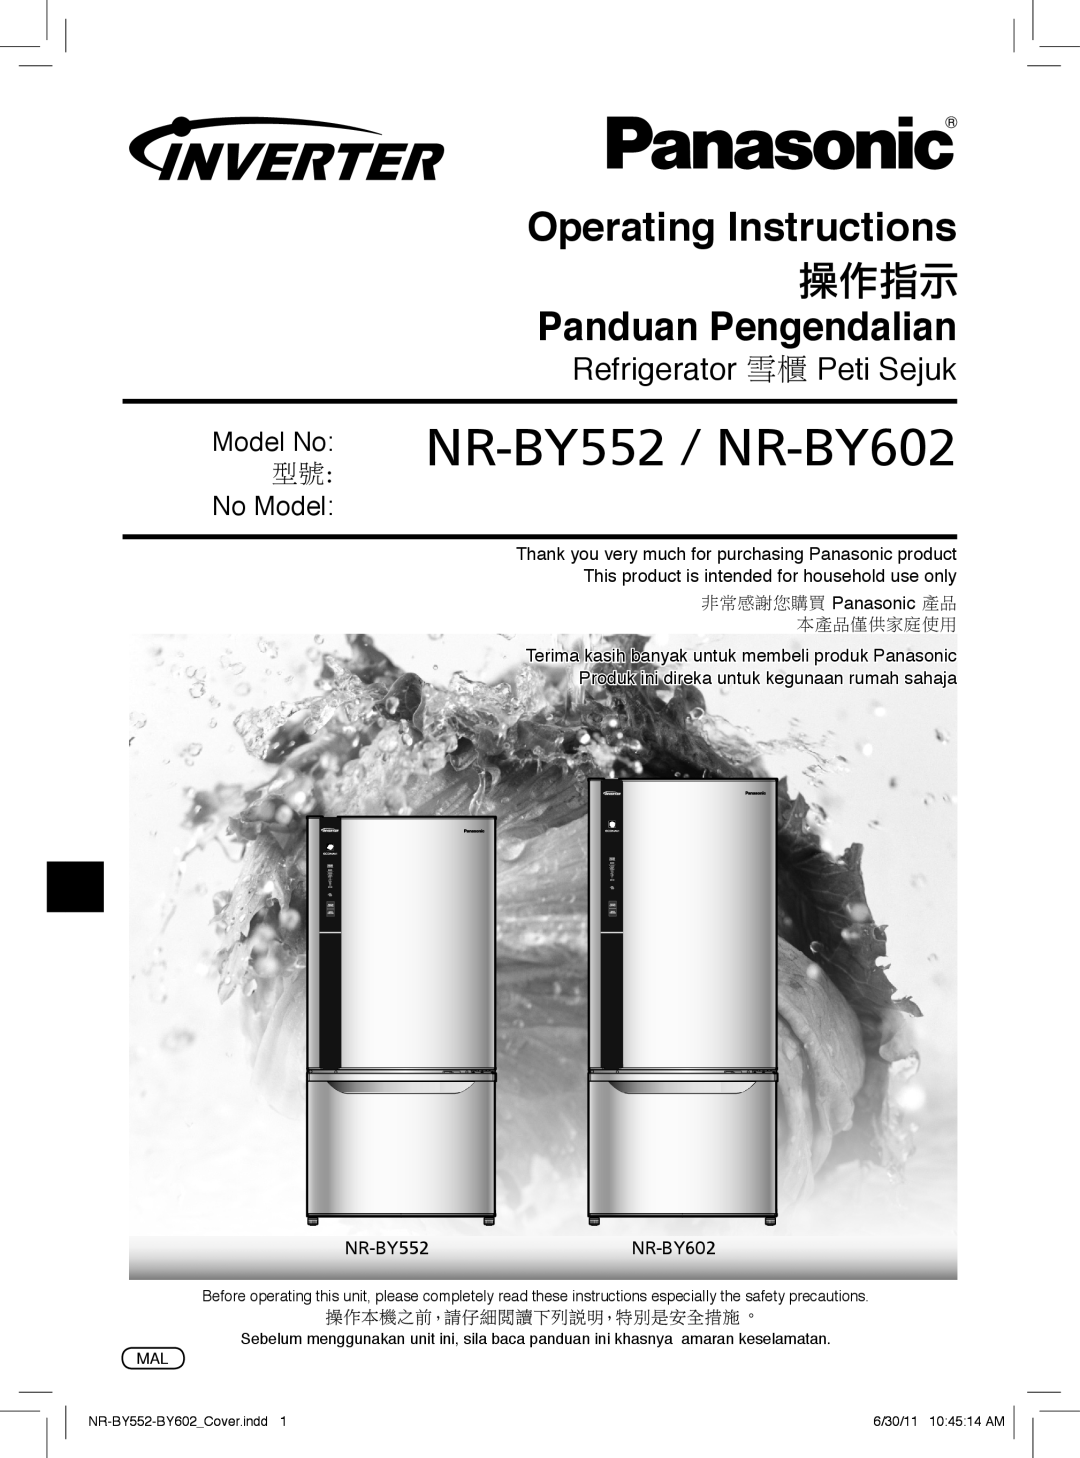 Panasonic operating instructions Model No No Model, NR-BY552 / NR-BY602, Operating Instructions Panduan Pengendalian 